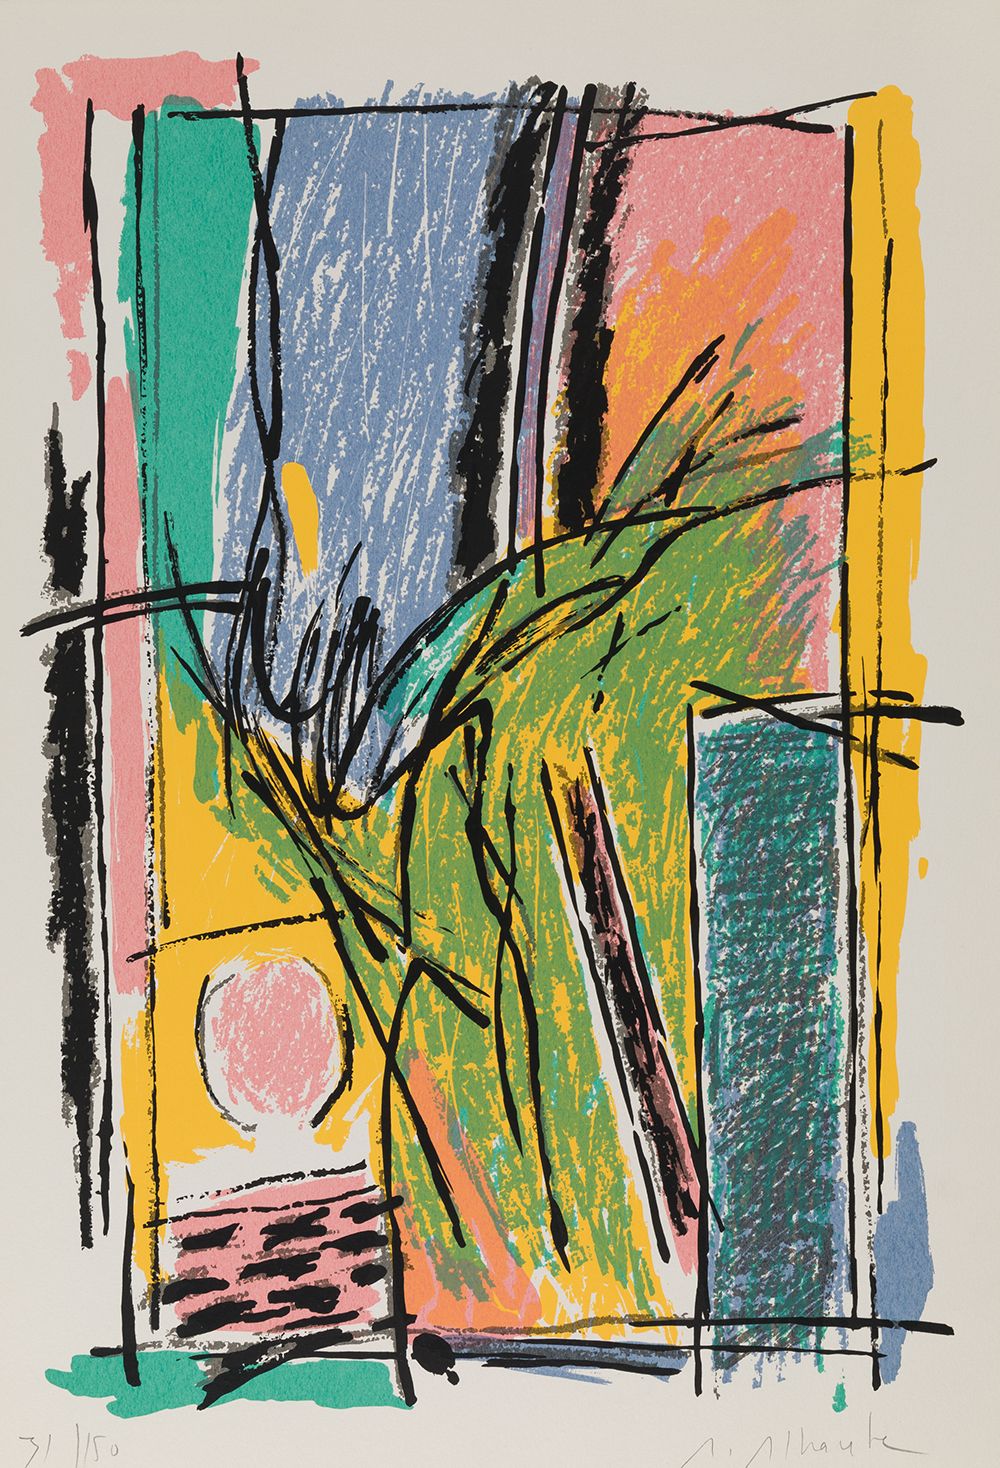 ALFONSO ALBACETE (1950 / .) "Composition" 底部有铅笔签名和31/150字样。纸张：50 x 35厘米。锂电图